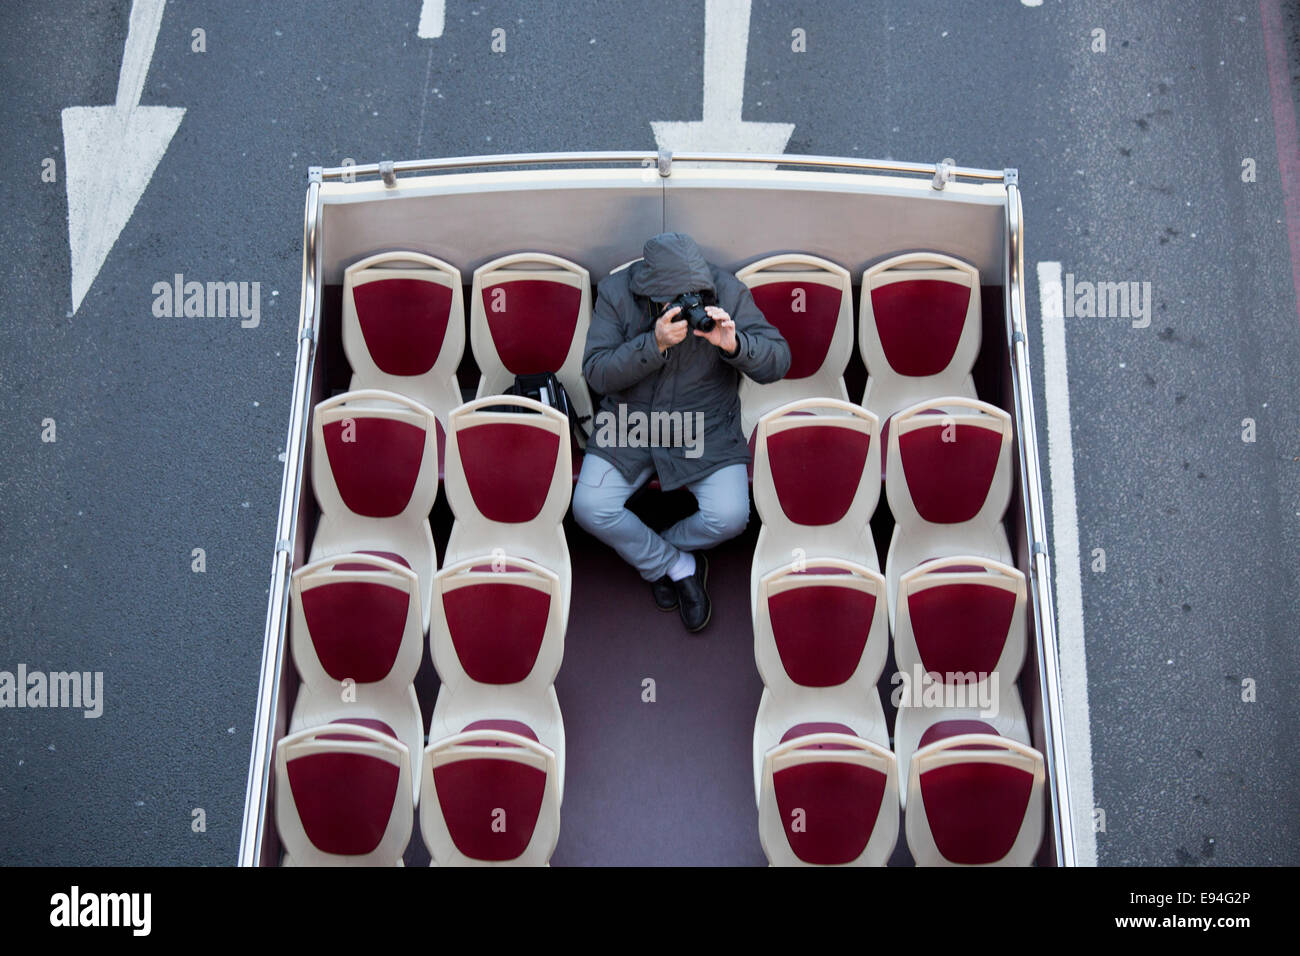 Man on open deck bus taking photographs camera Stock Photo